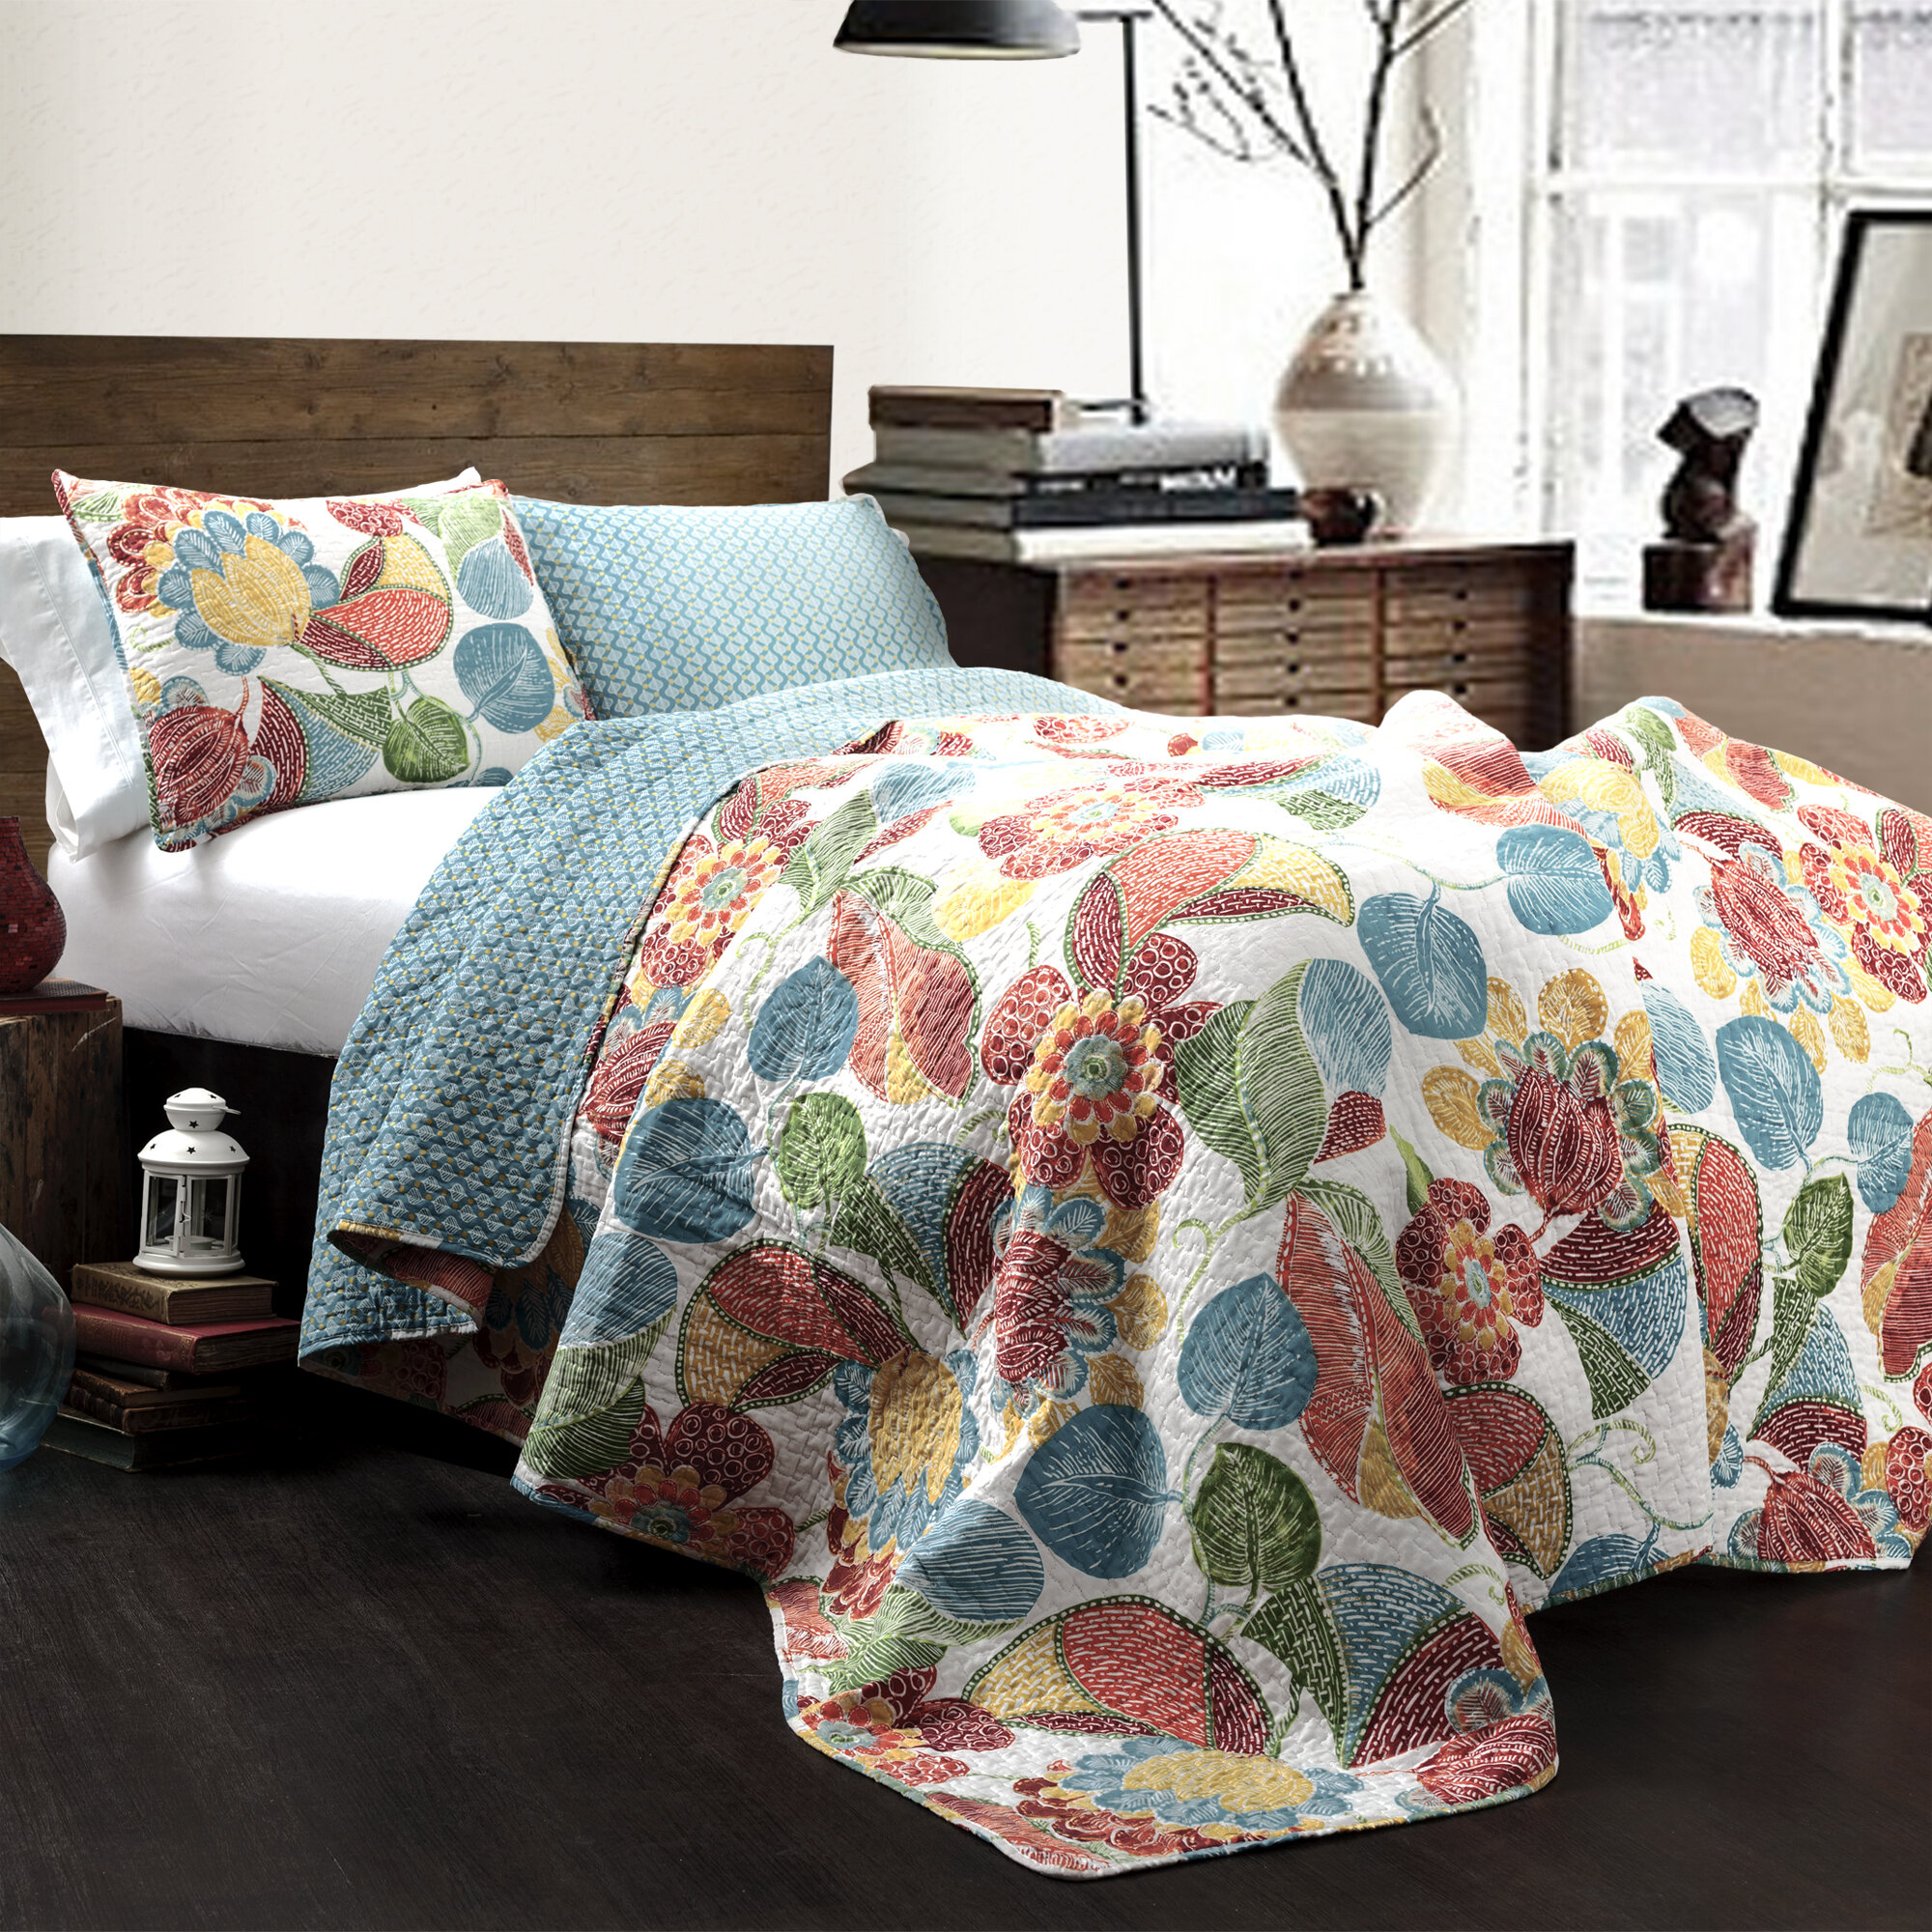 Perennial Garden Quilt Set 100% Cotton Filled Reversible Comfortable Bed Quilt